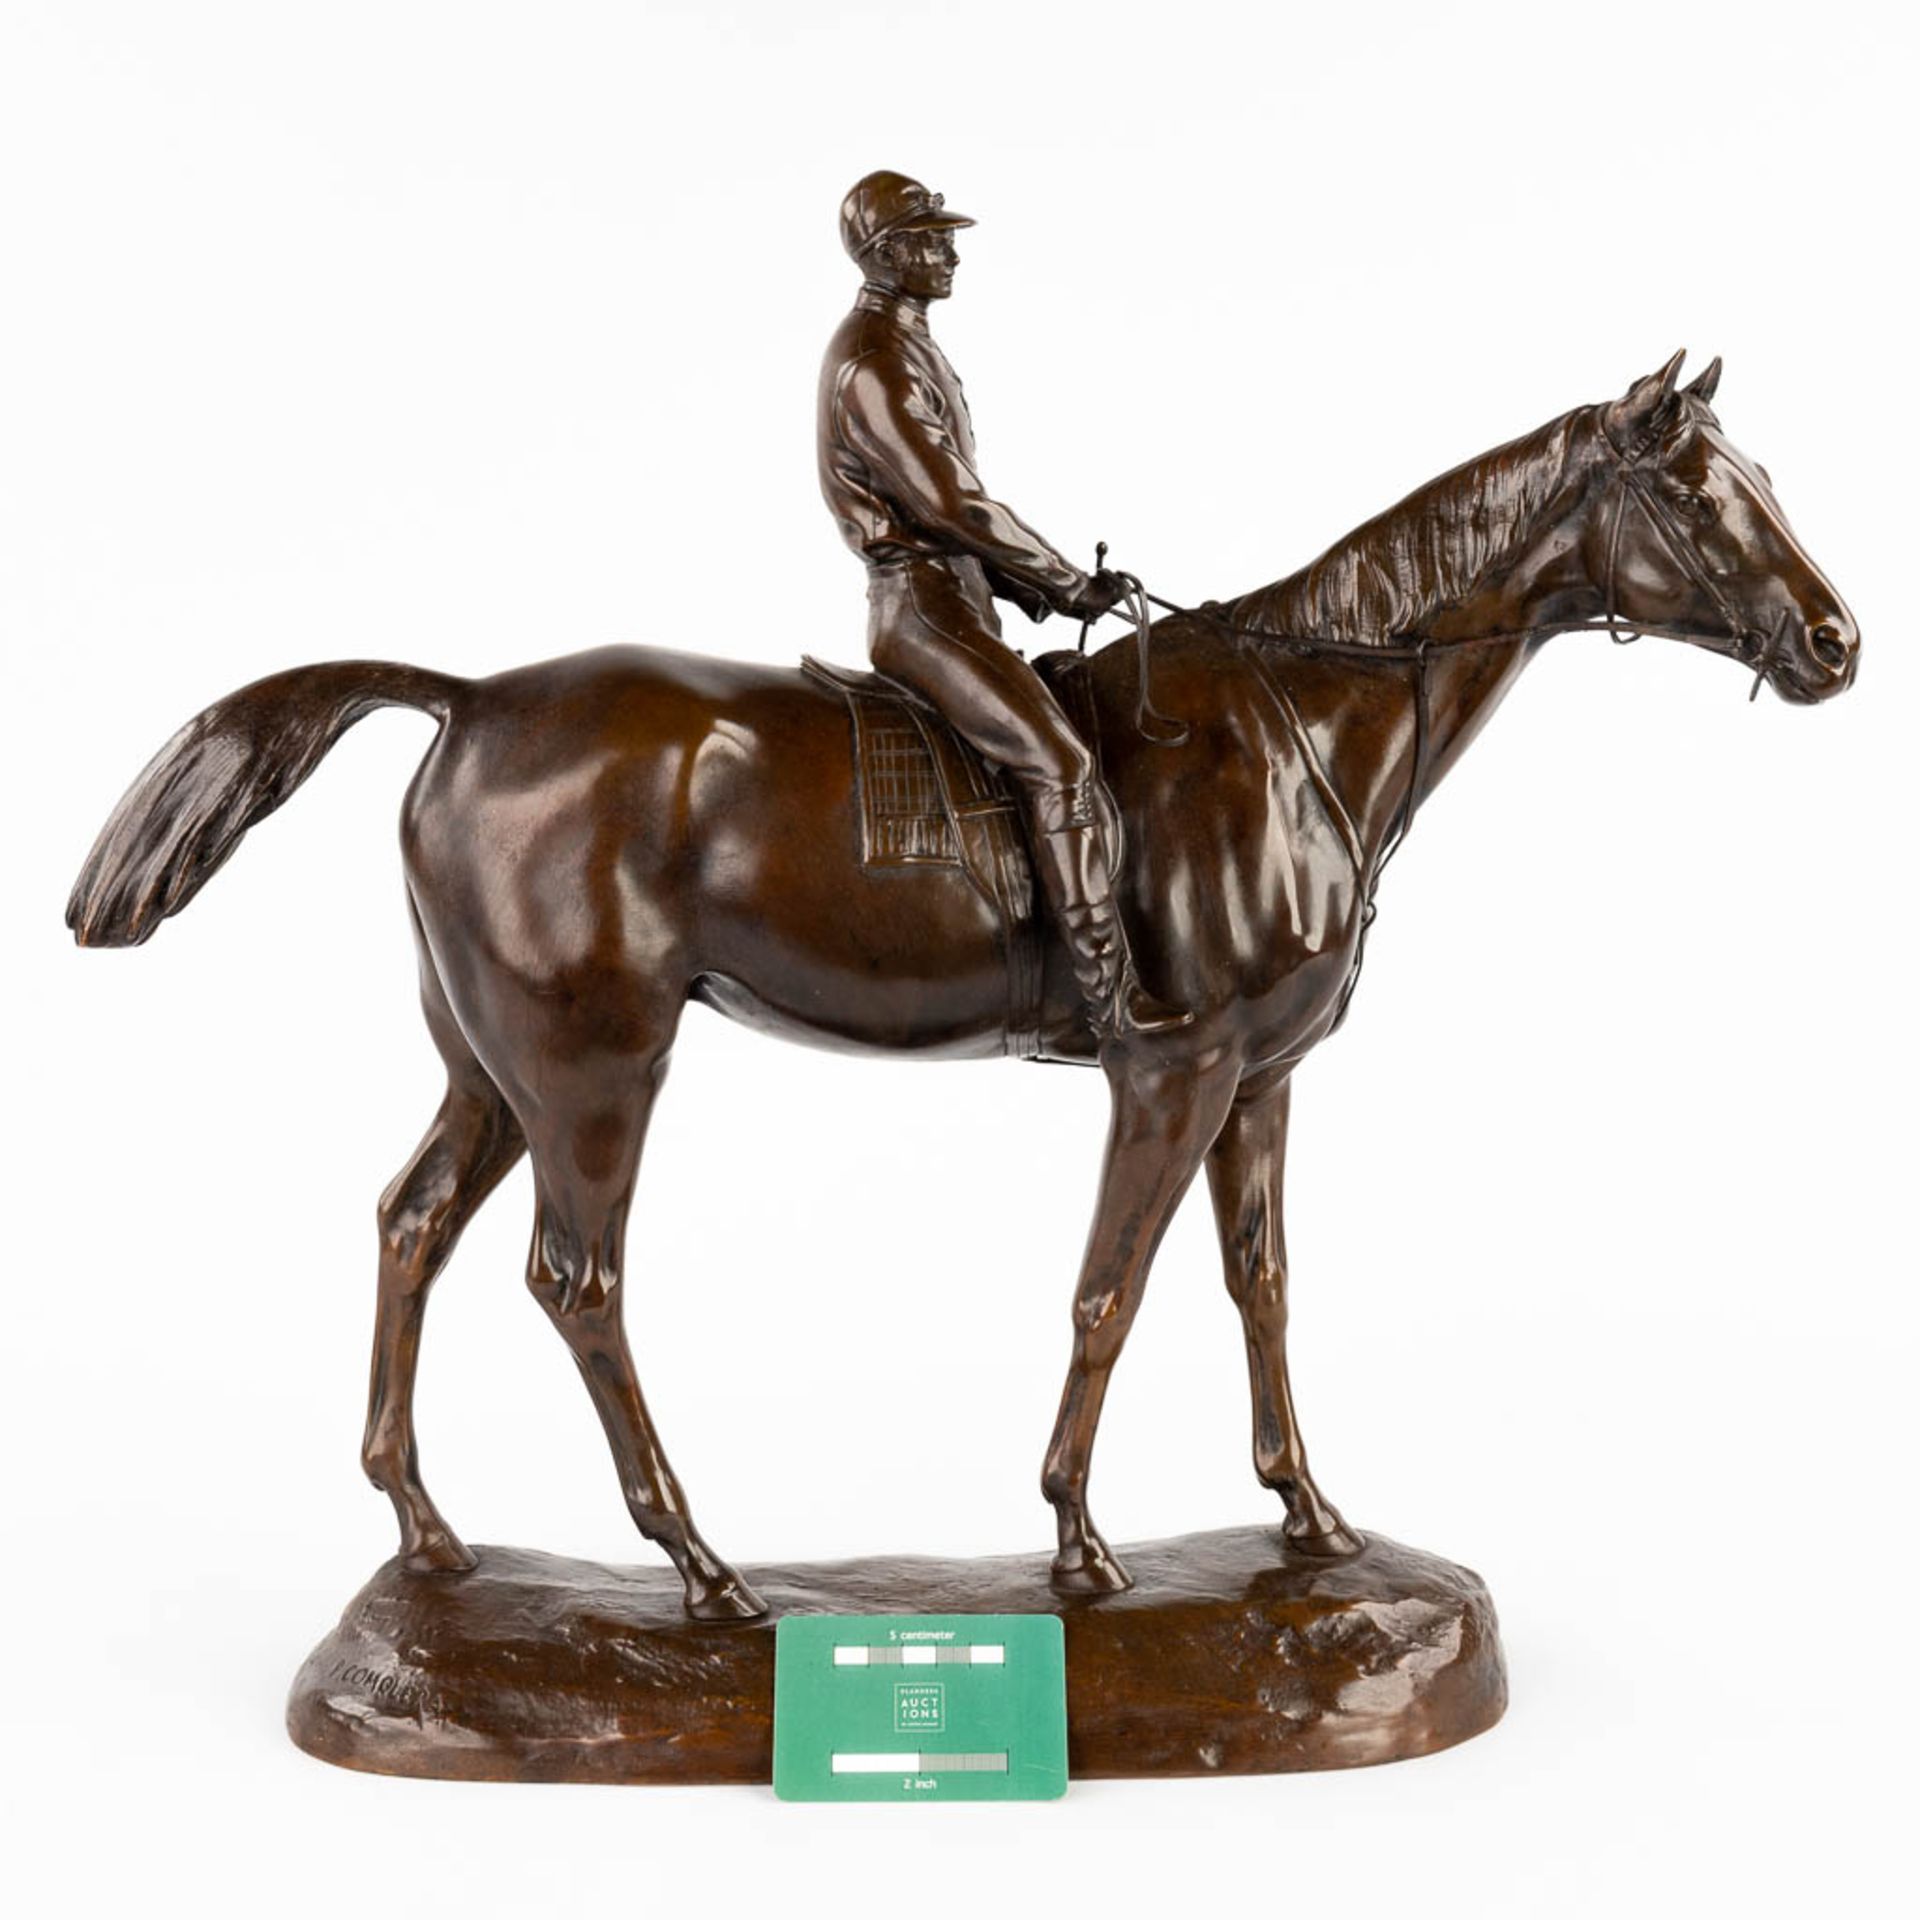 Paul COMOLÉRA (1818-c.1897) 'Horse with rider' patinated bronze. (L: 12 x W: 50 x H: 46 cm) - Bild 2 aus 10